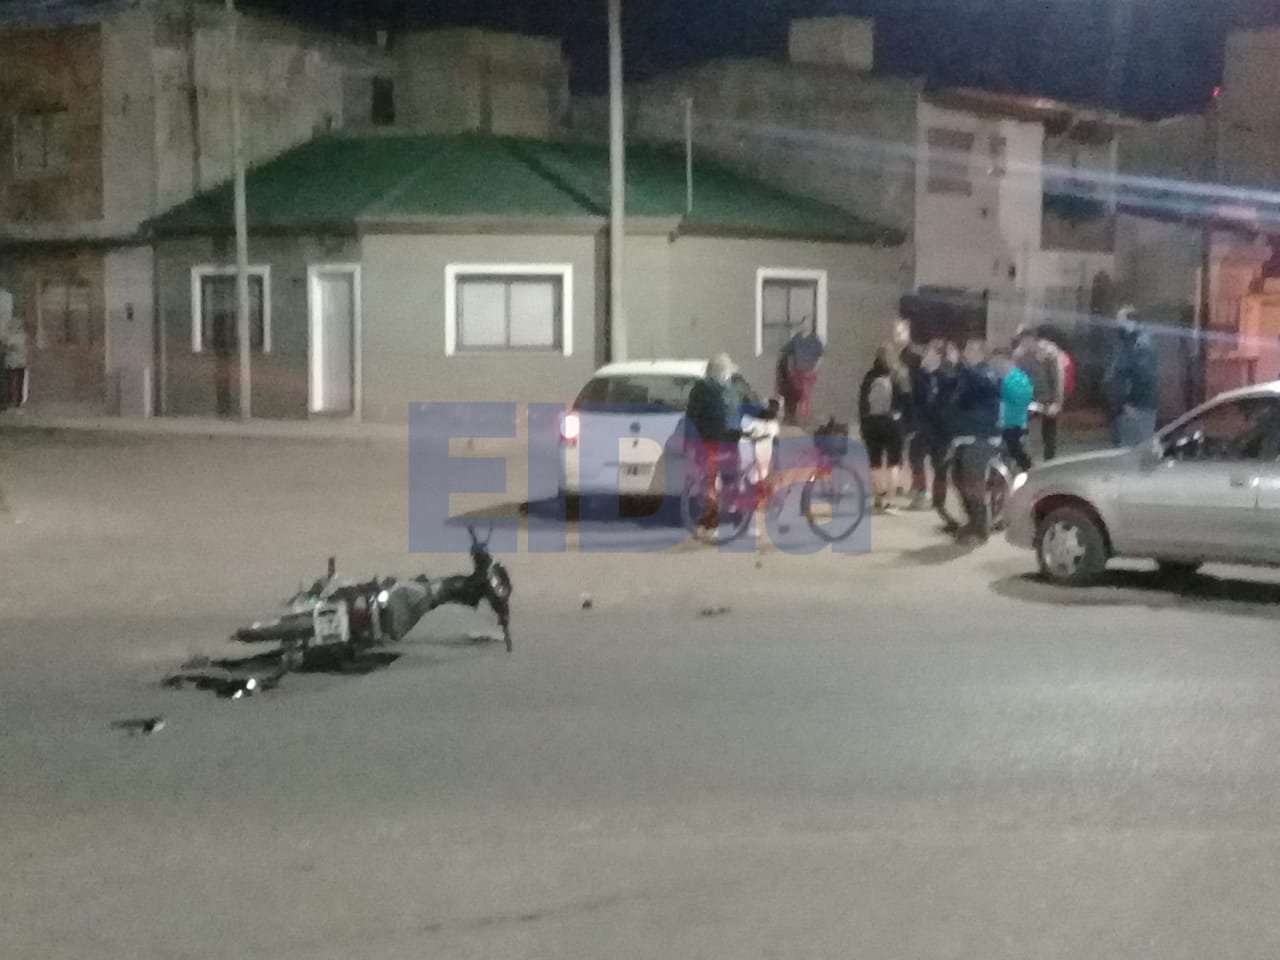 Un auto chocó a una moto: un joven fue llevado de urgencia al hospital